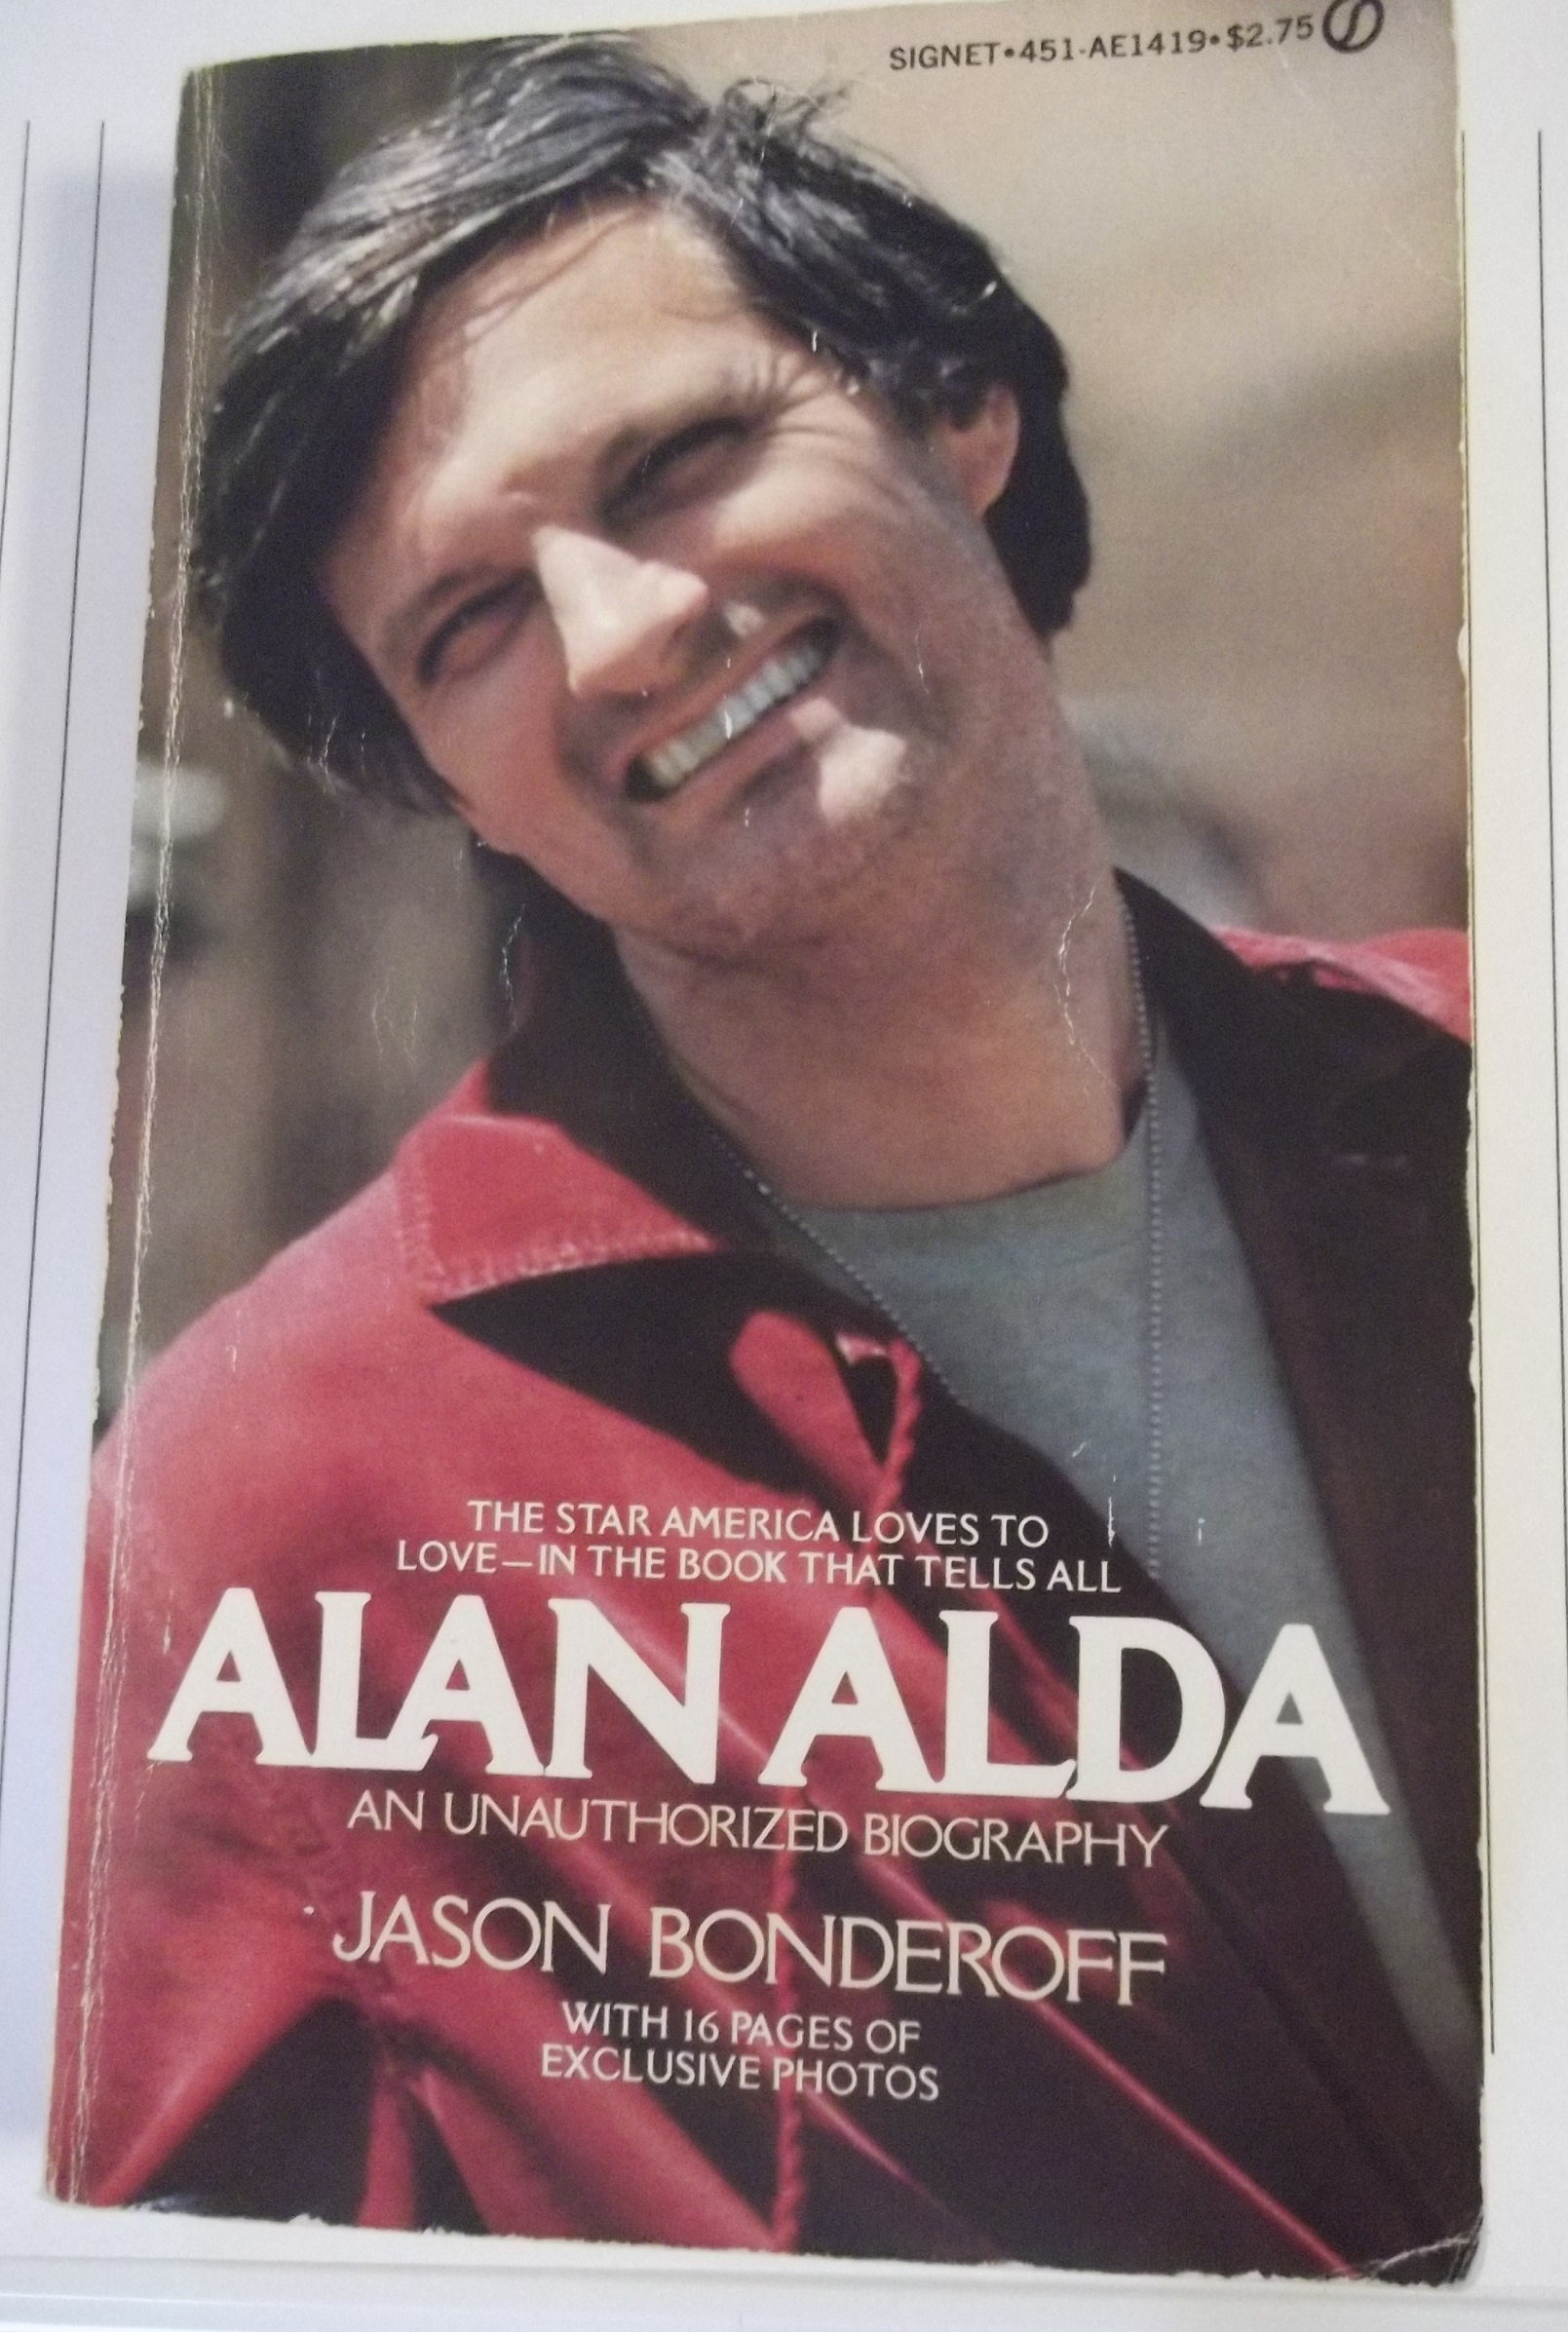 Photo I took of Alan Alda book I was reading earlier